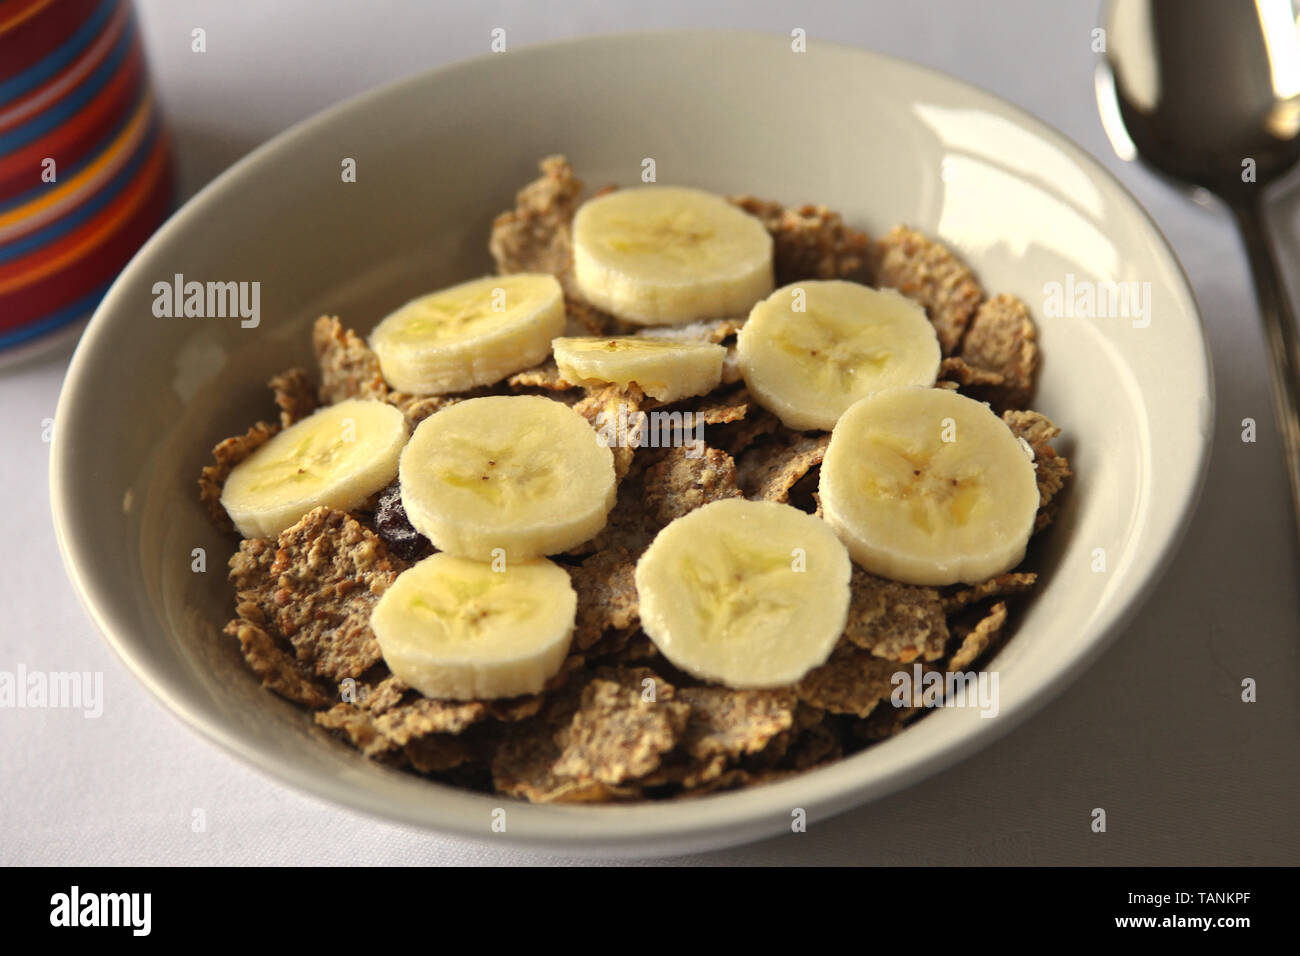 Close up healthy breakfast of bran flakes and banana. Stock Photo